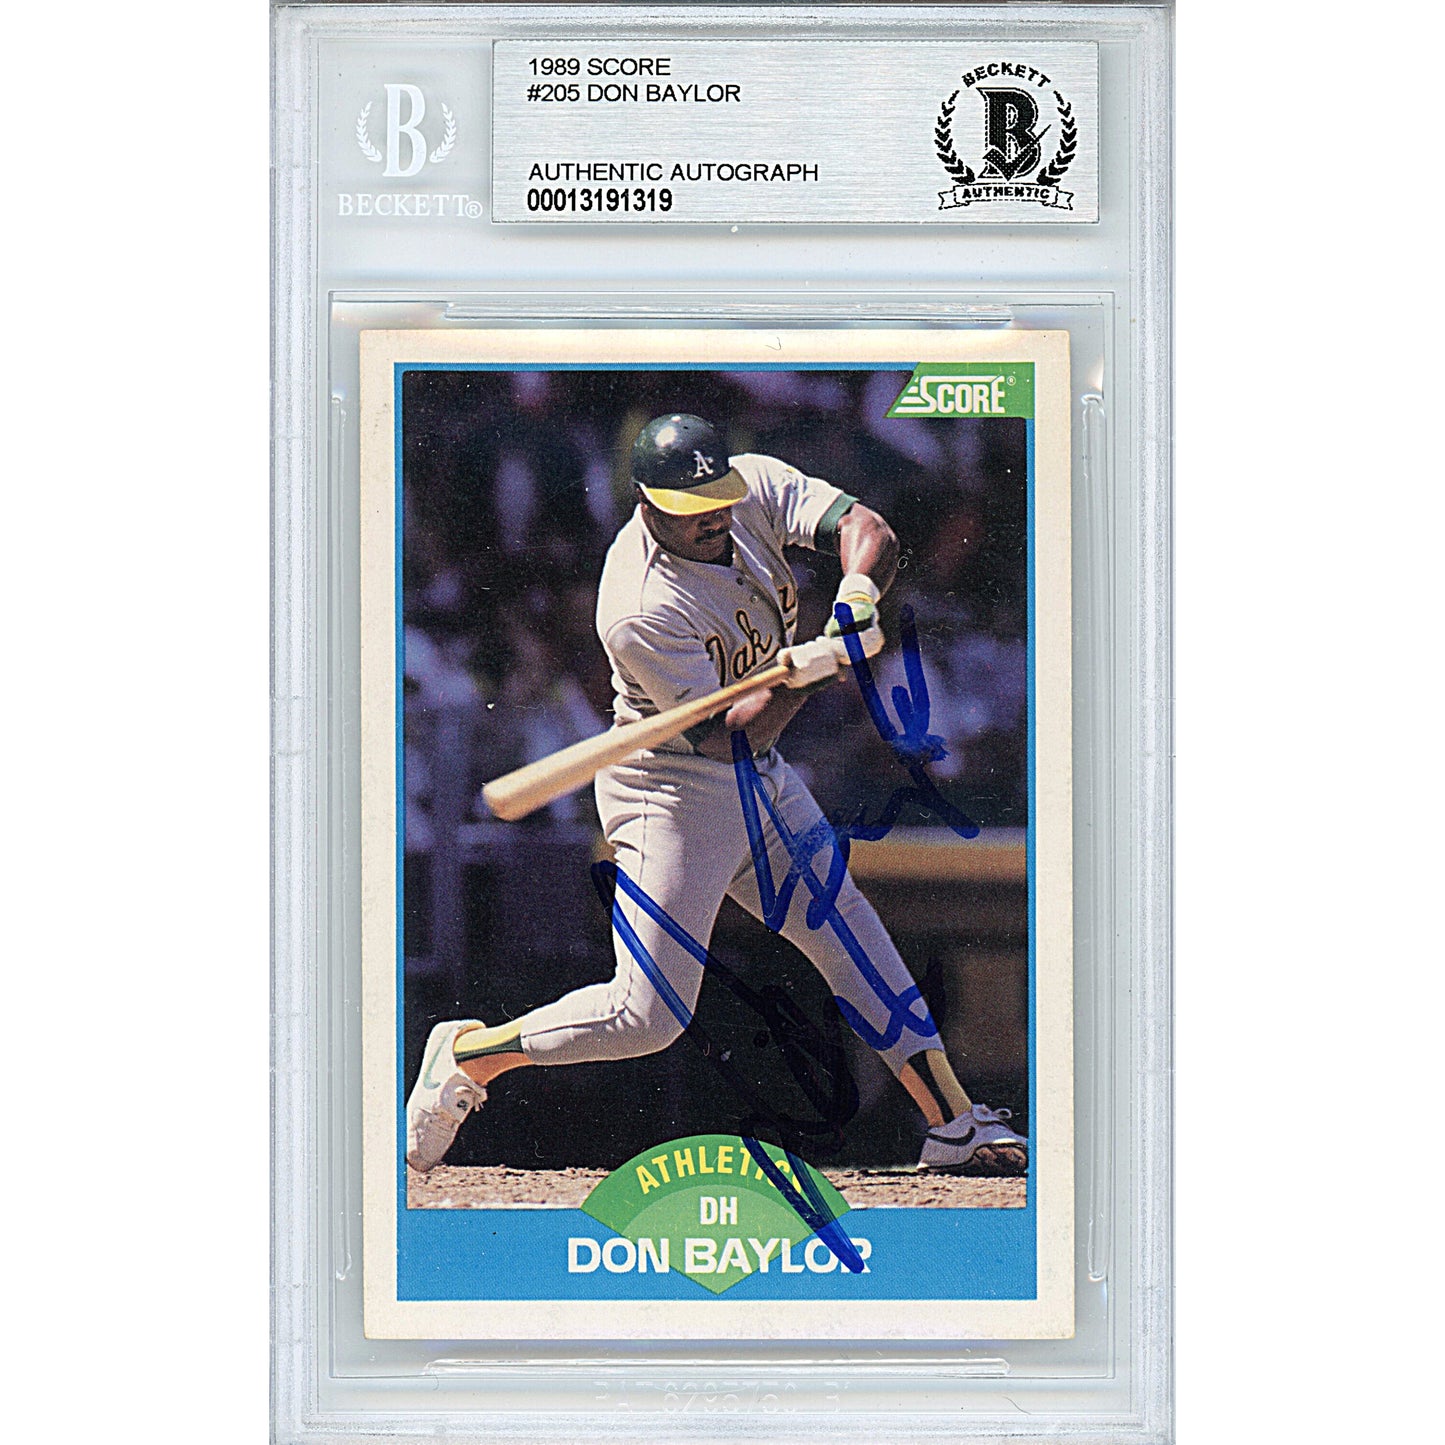 Baseballs- Autographed- Don Baylor Signed Oakland Athletics A's 1989 Score Baseball Card Beckett BAS Slabbed 00013191319 - 101